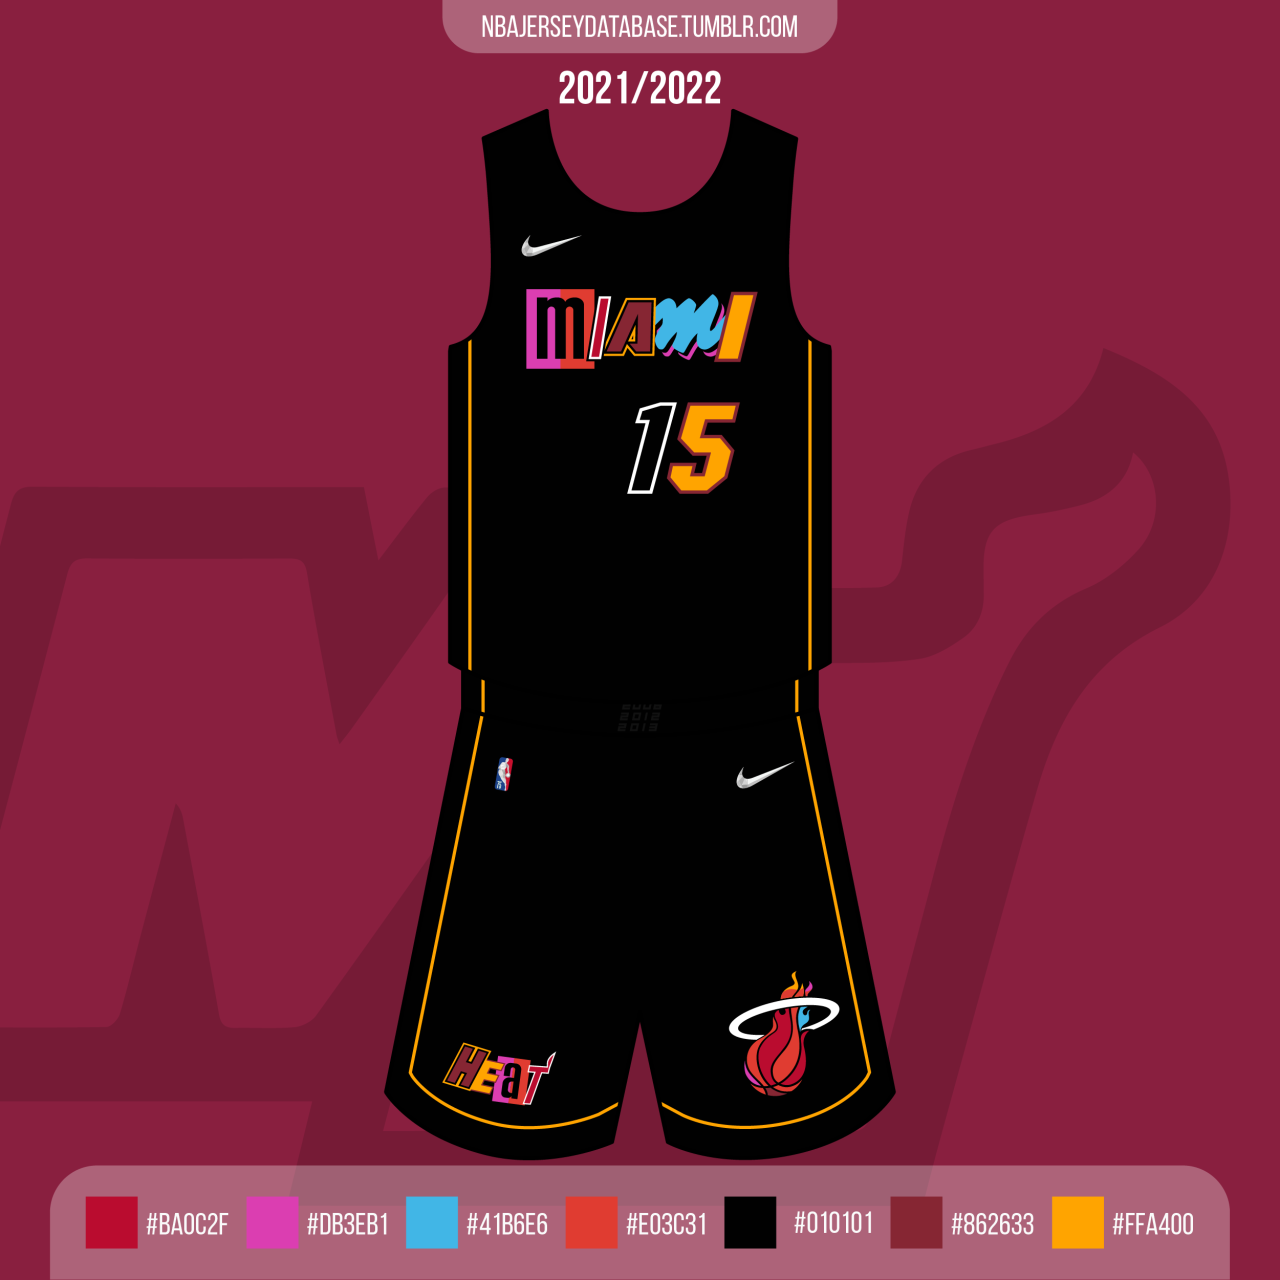 NBA Jersey Database, Miami Heat City Jersey 2021-2022